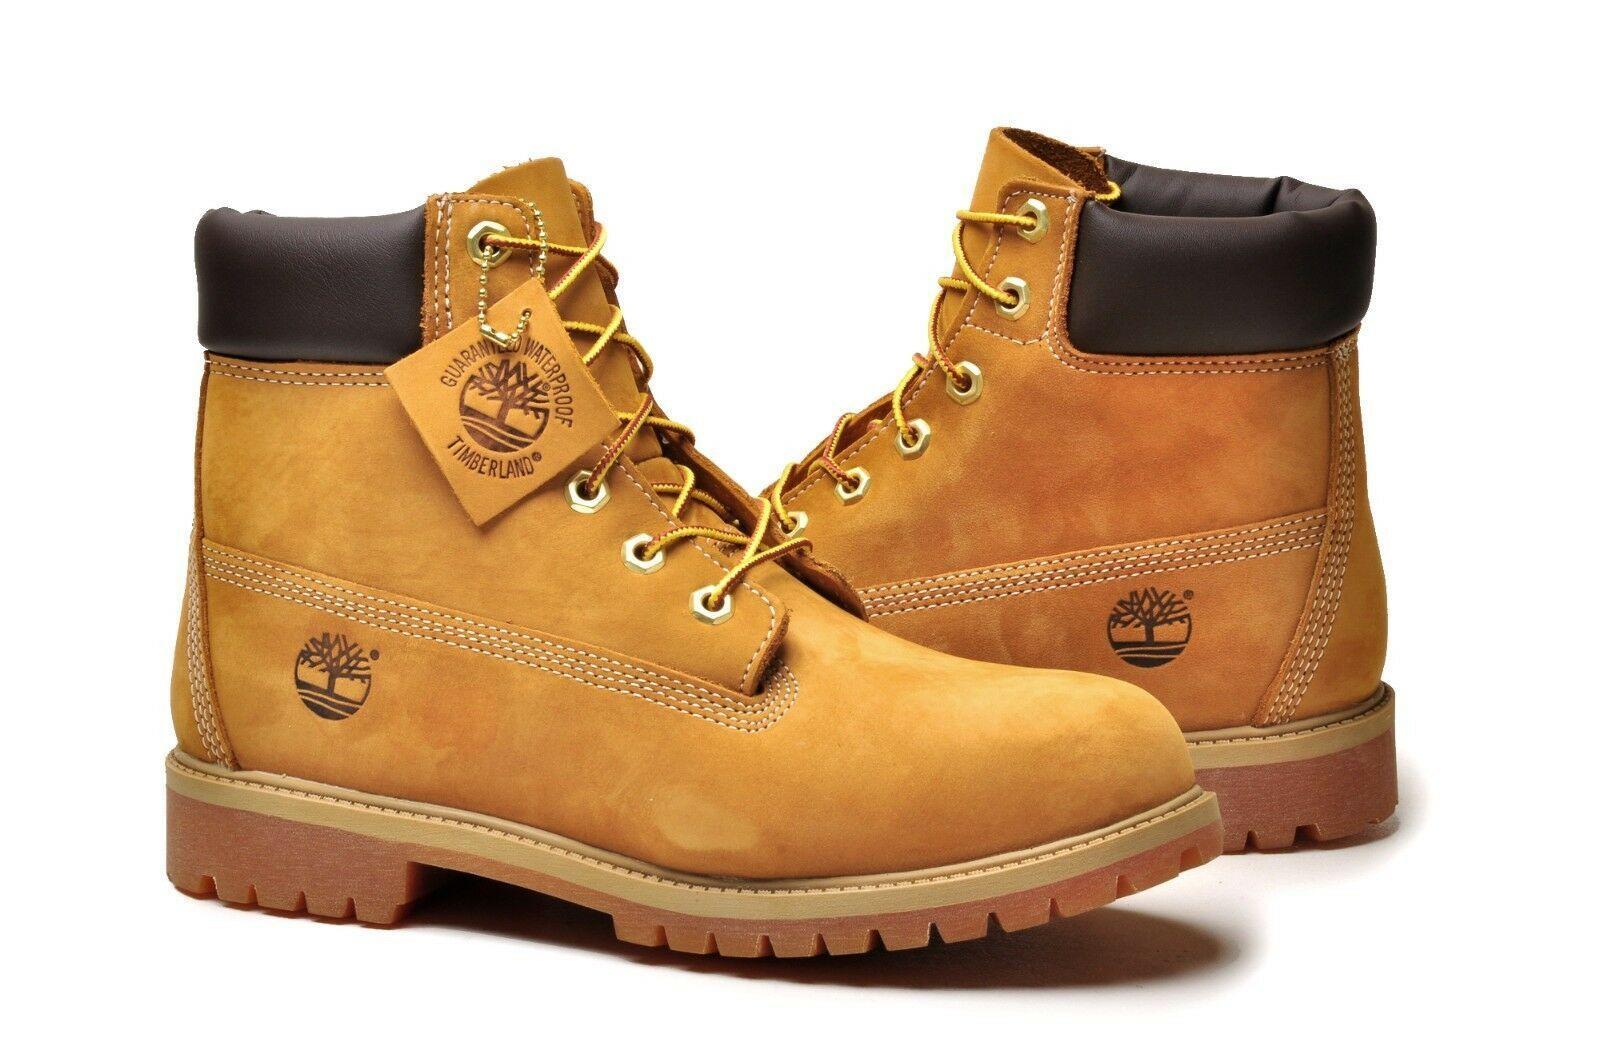 Timberland Womens Premium 6"" Waterproof Leather Boots Shoes - Wheat Nubuck - US 10